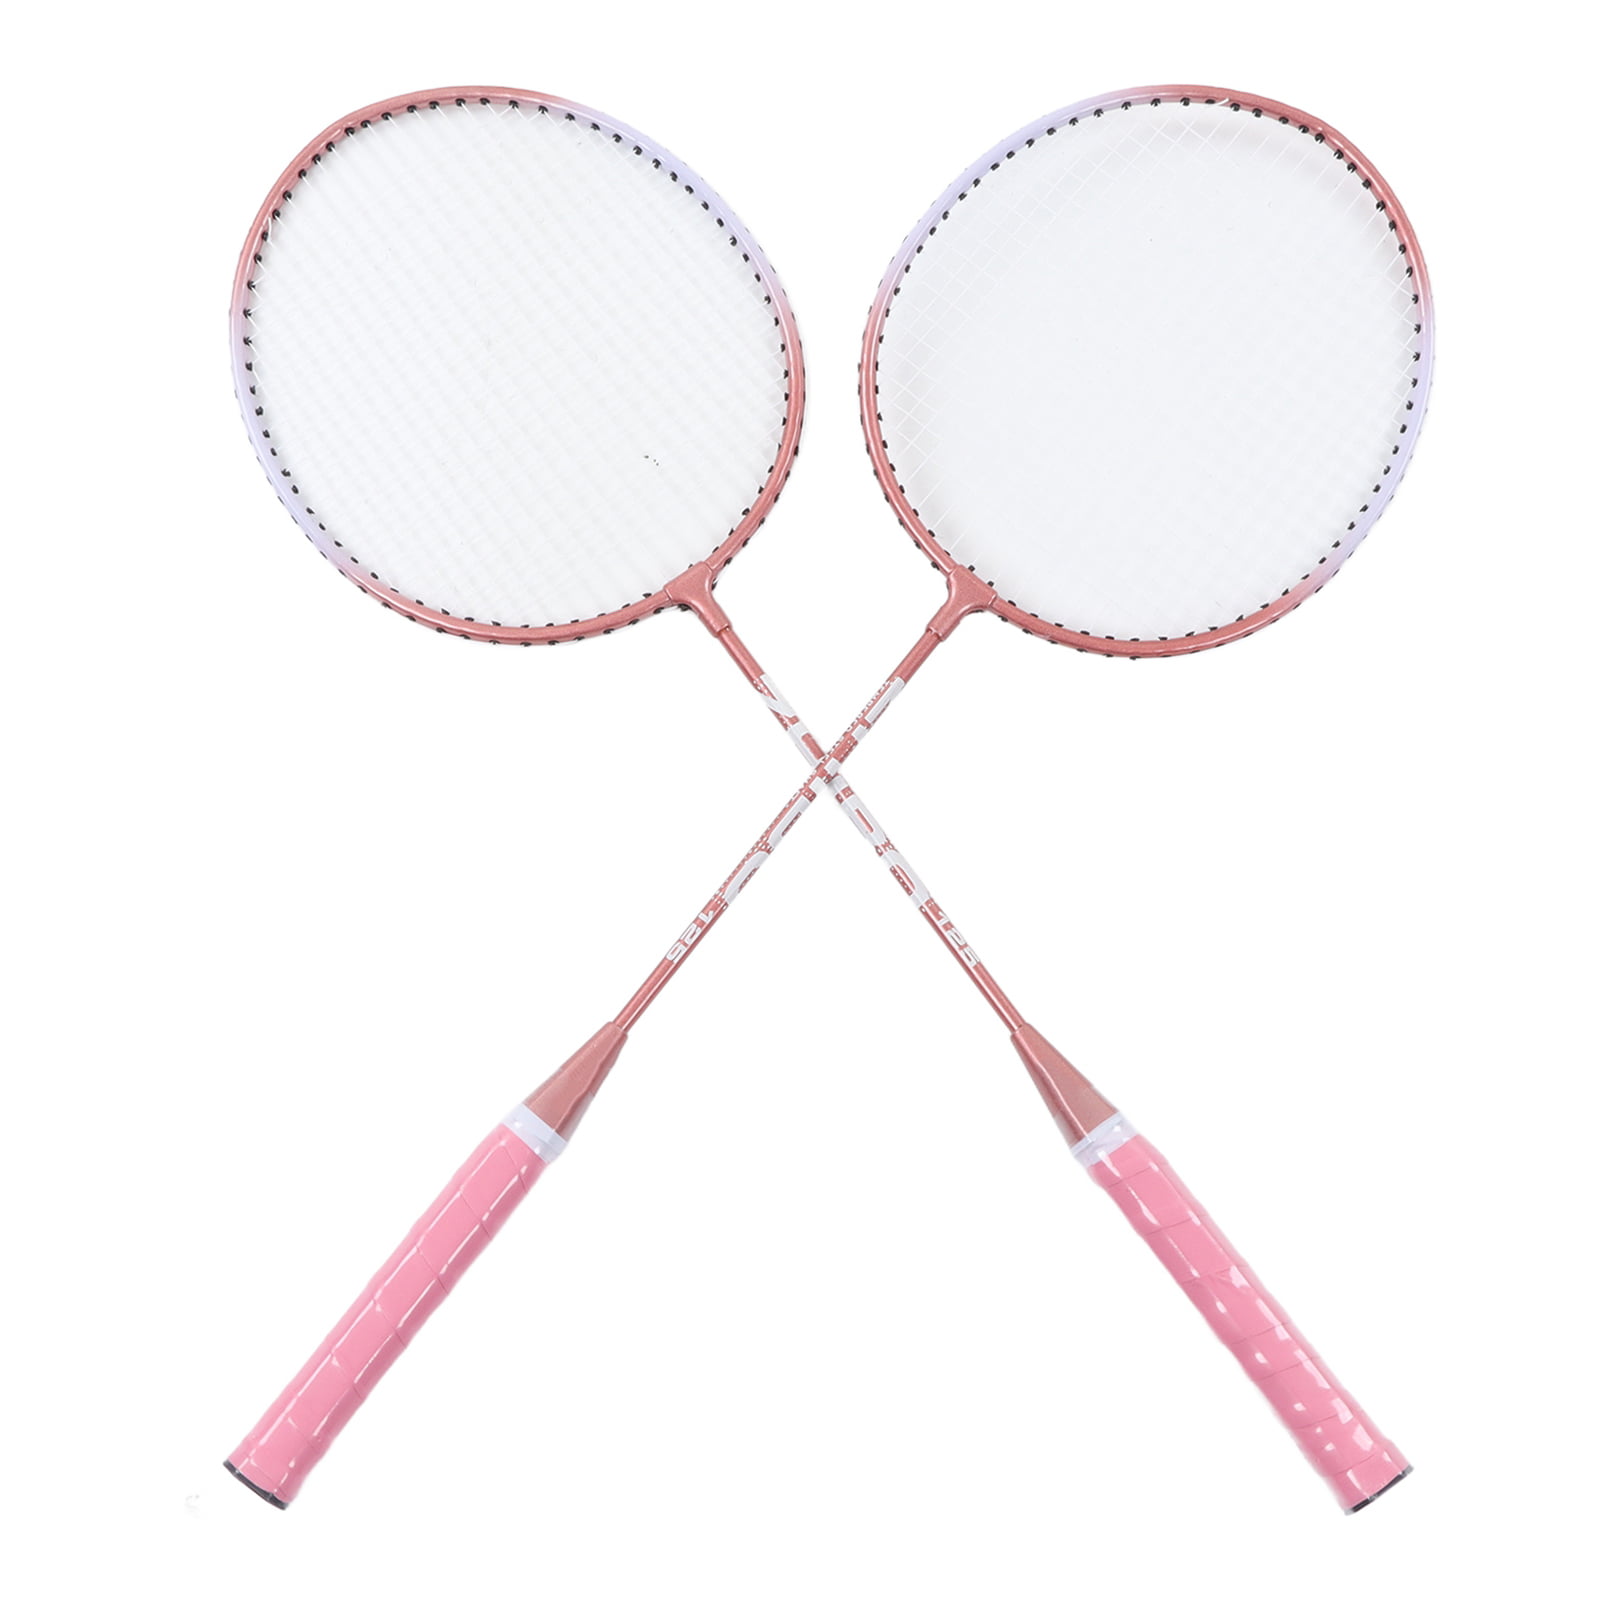 Badminton Rackets Set, Badminton Rackets Pink Comfortable Grip For Beginner 